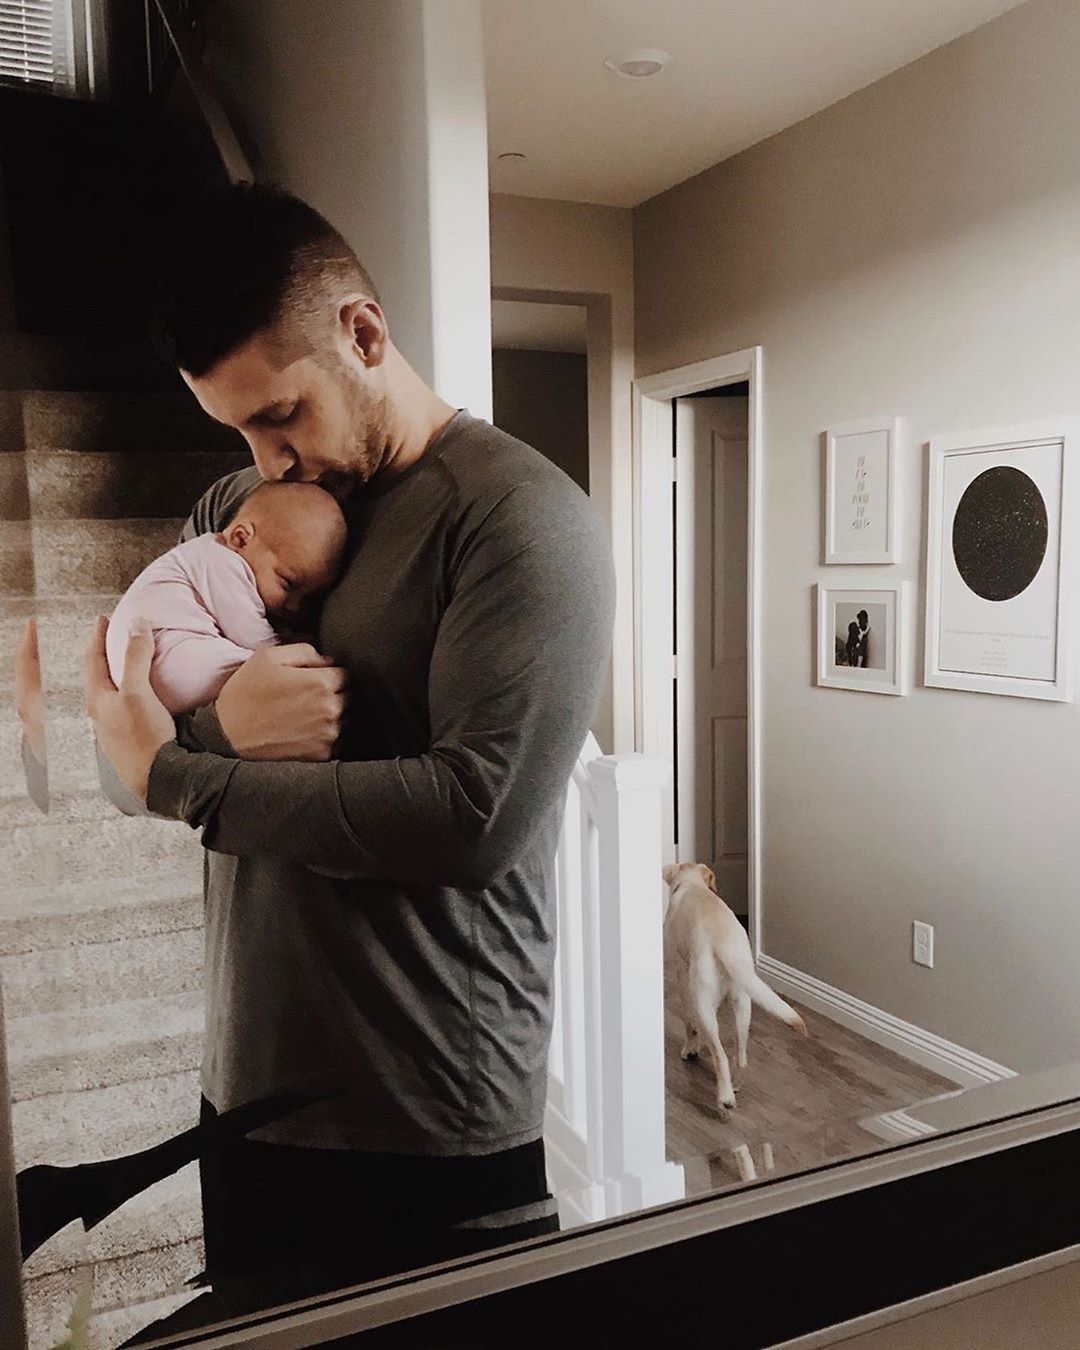 Dad holding newborn baby at home. Photo by Instagram user @littlesleepies